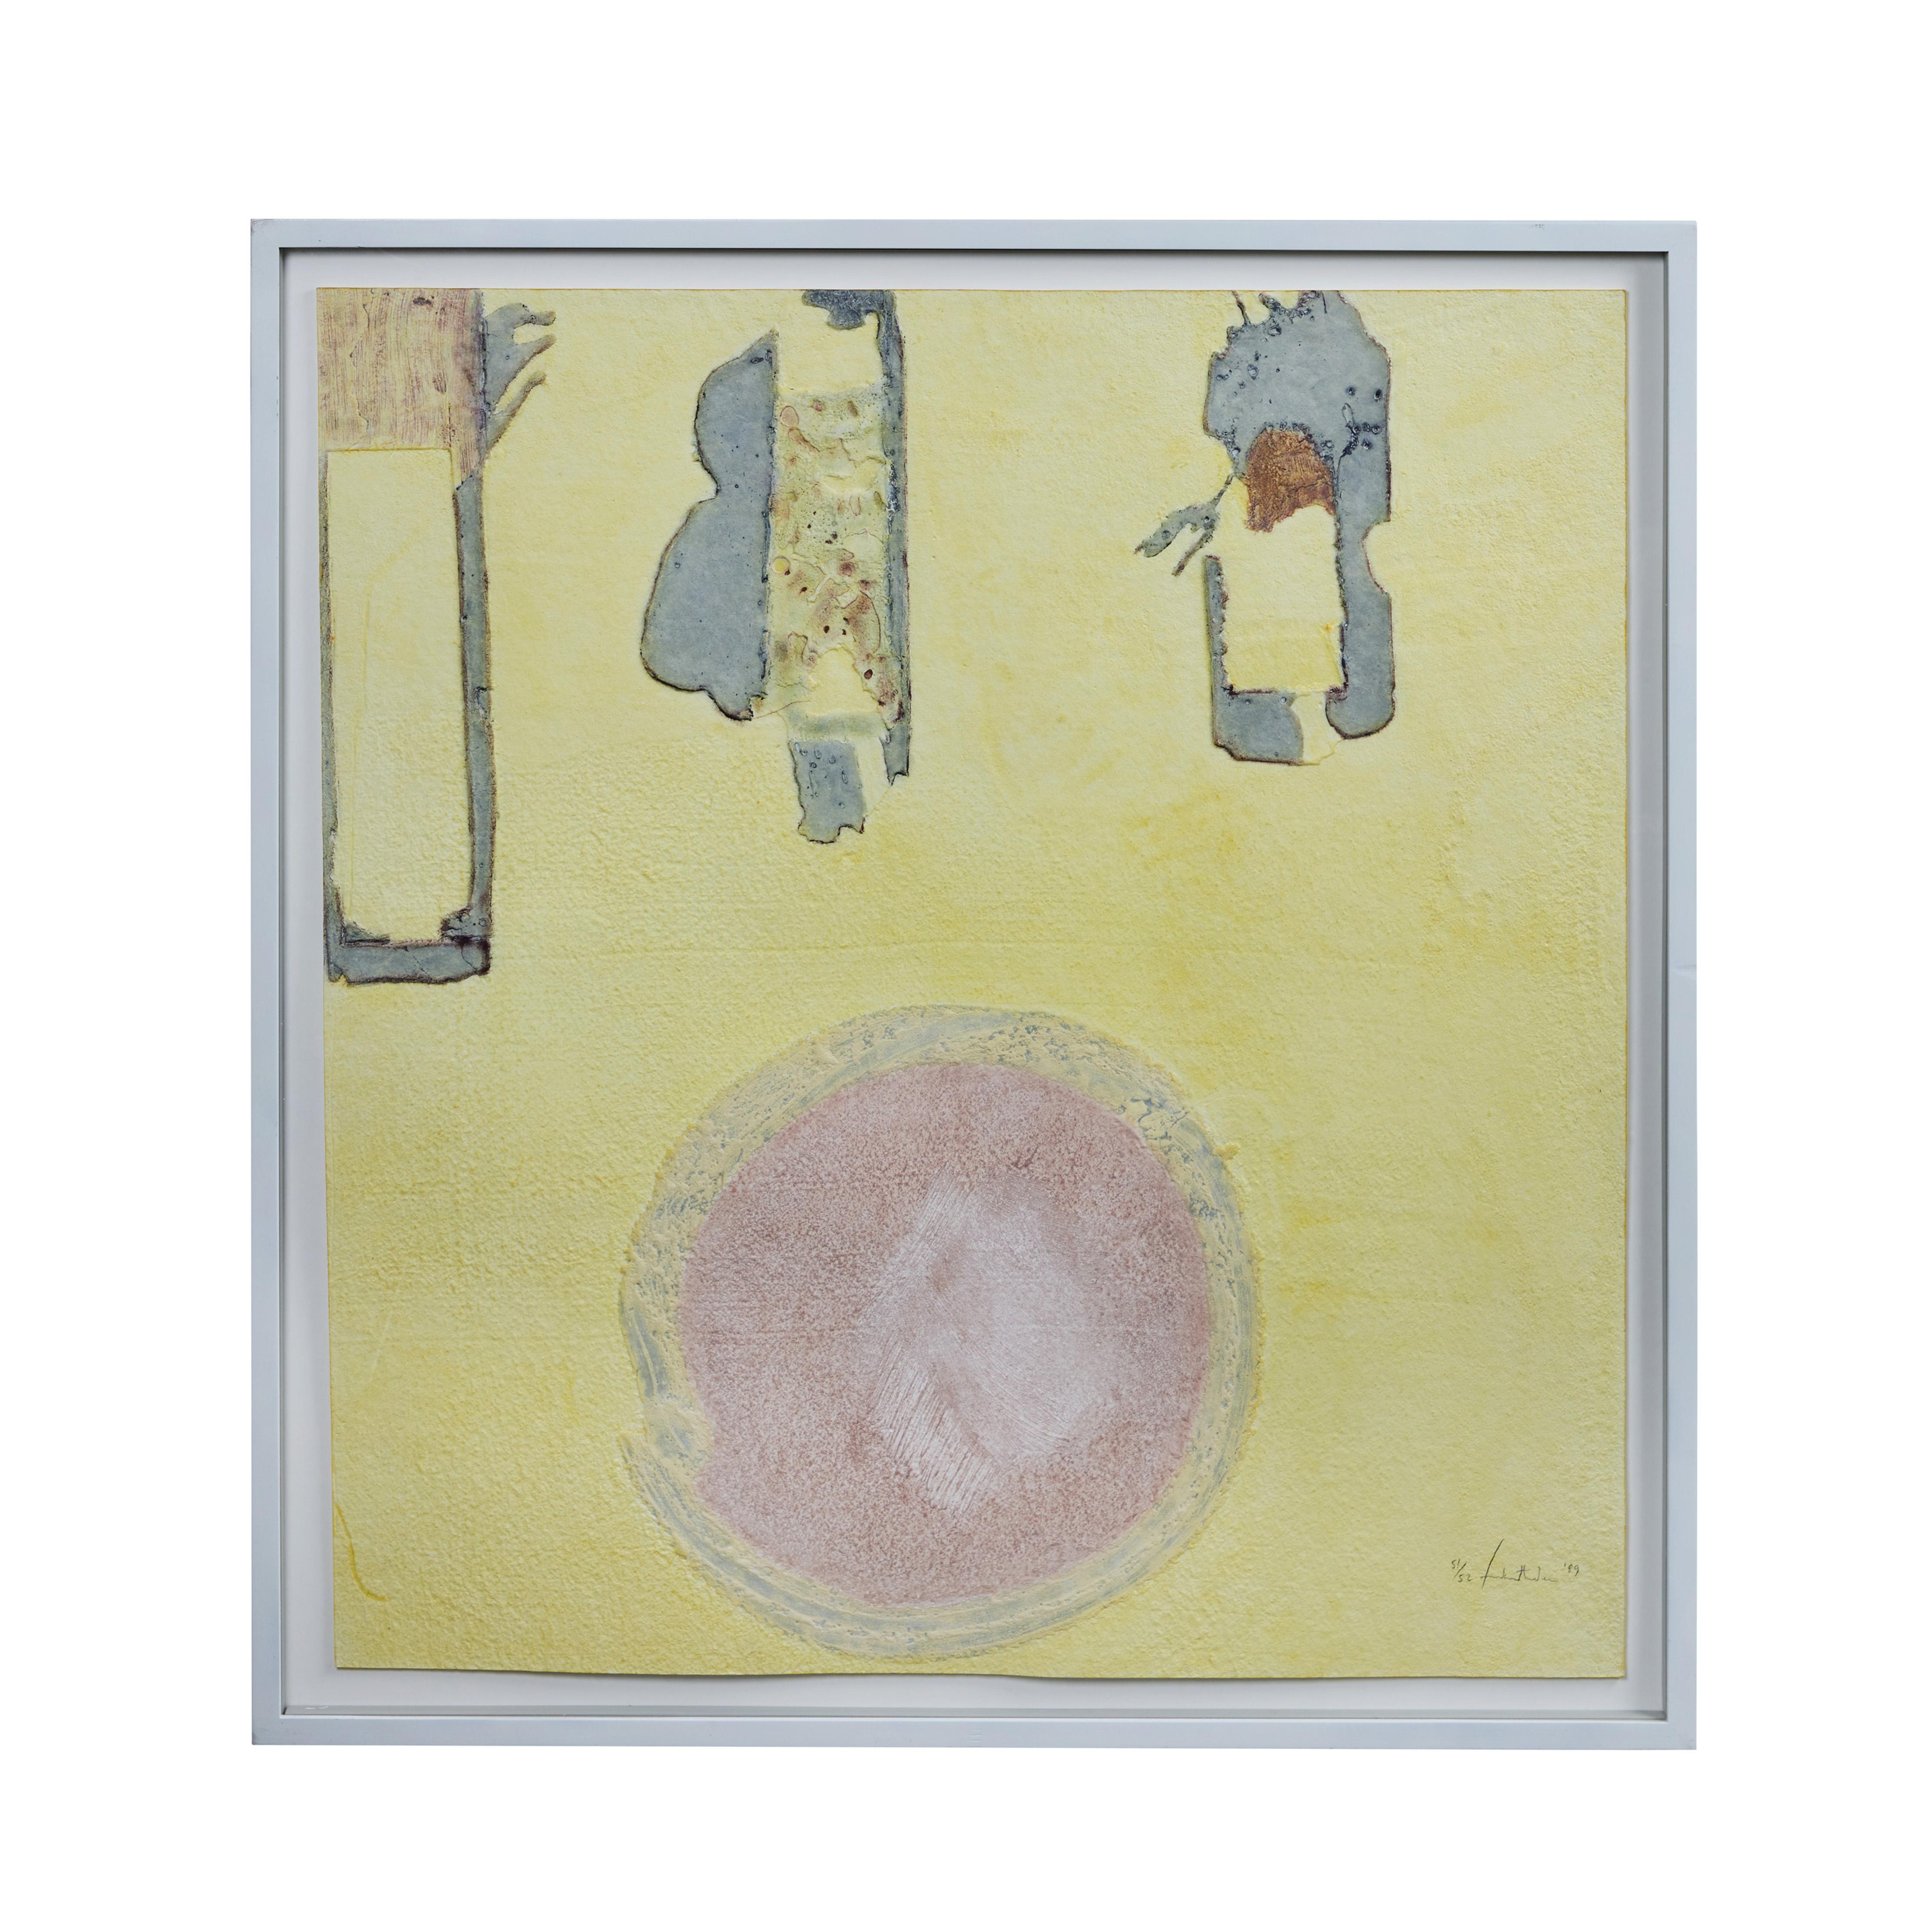 Helen Frankenthaler Abstract Print - "Sirocco" Mixographia